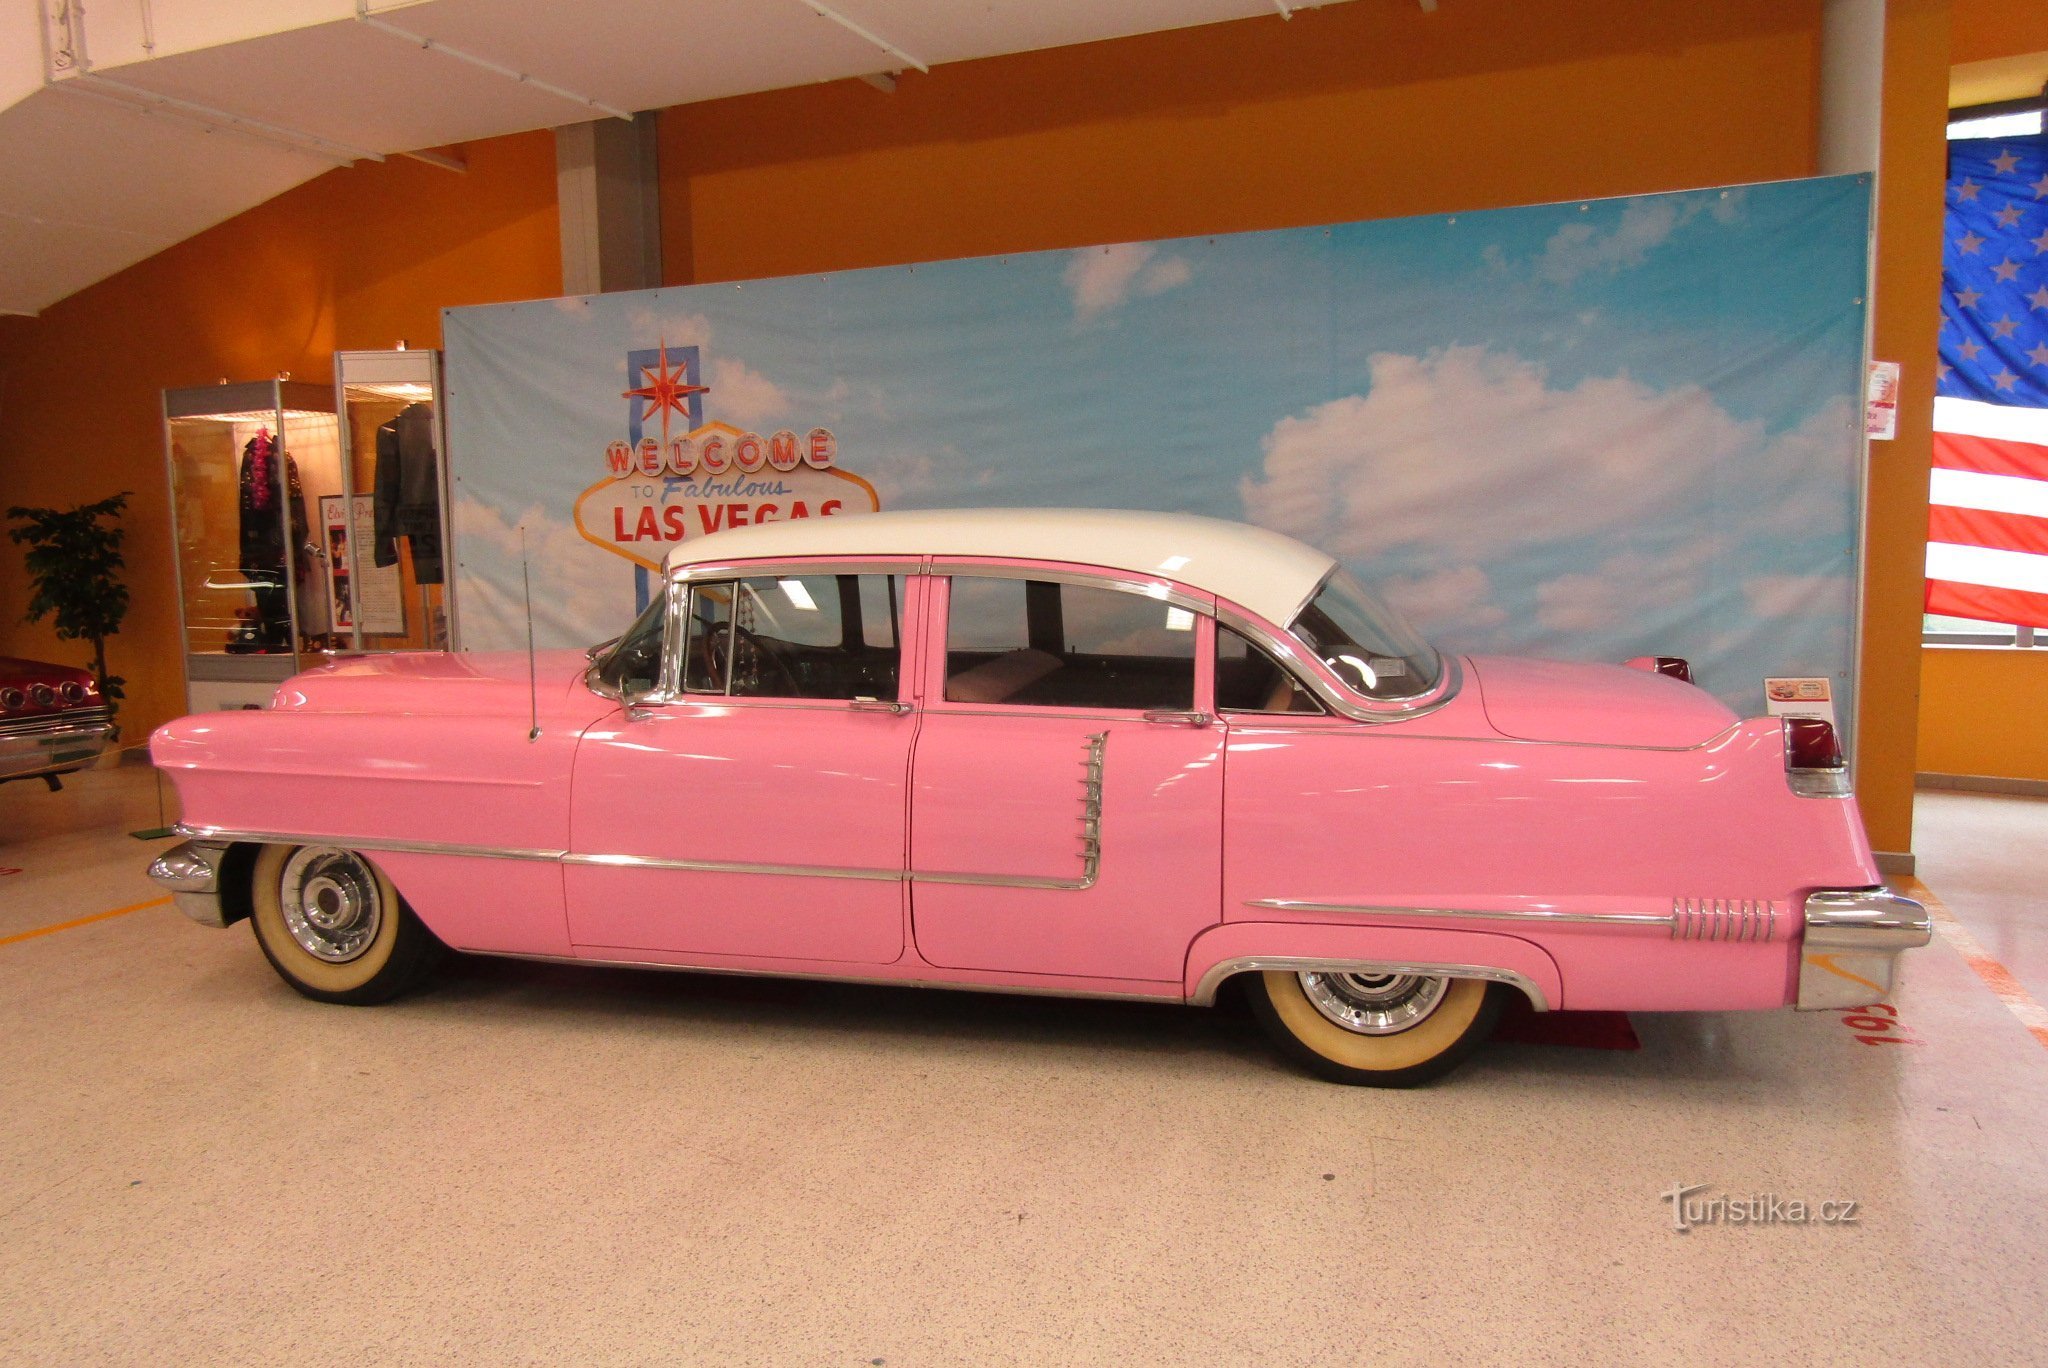 American Classic Cars, Černá Louka exhibition center, Ostrava